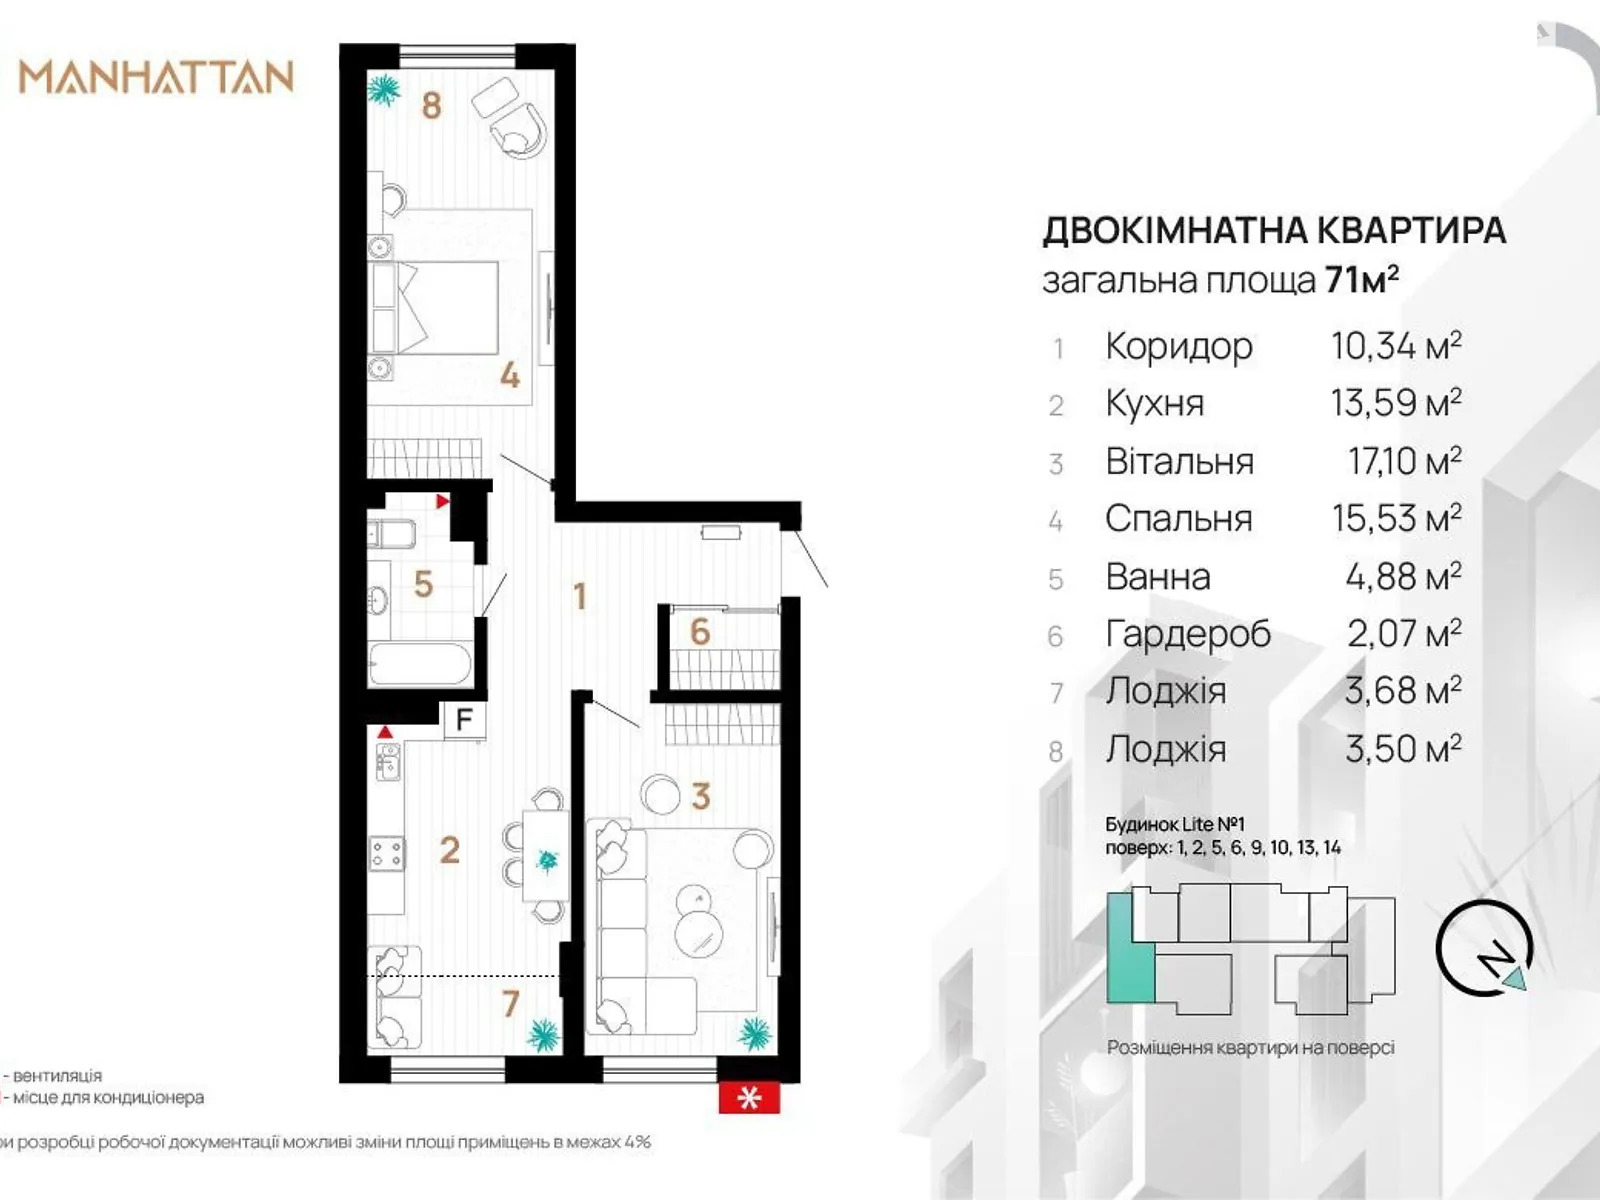 Продается 2-комнатная квартира 73.4 кв. м в Ивано-Франковске, цена: 67600 $